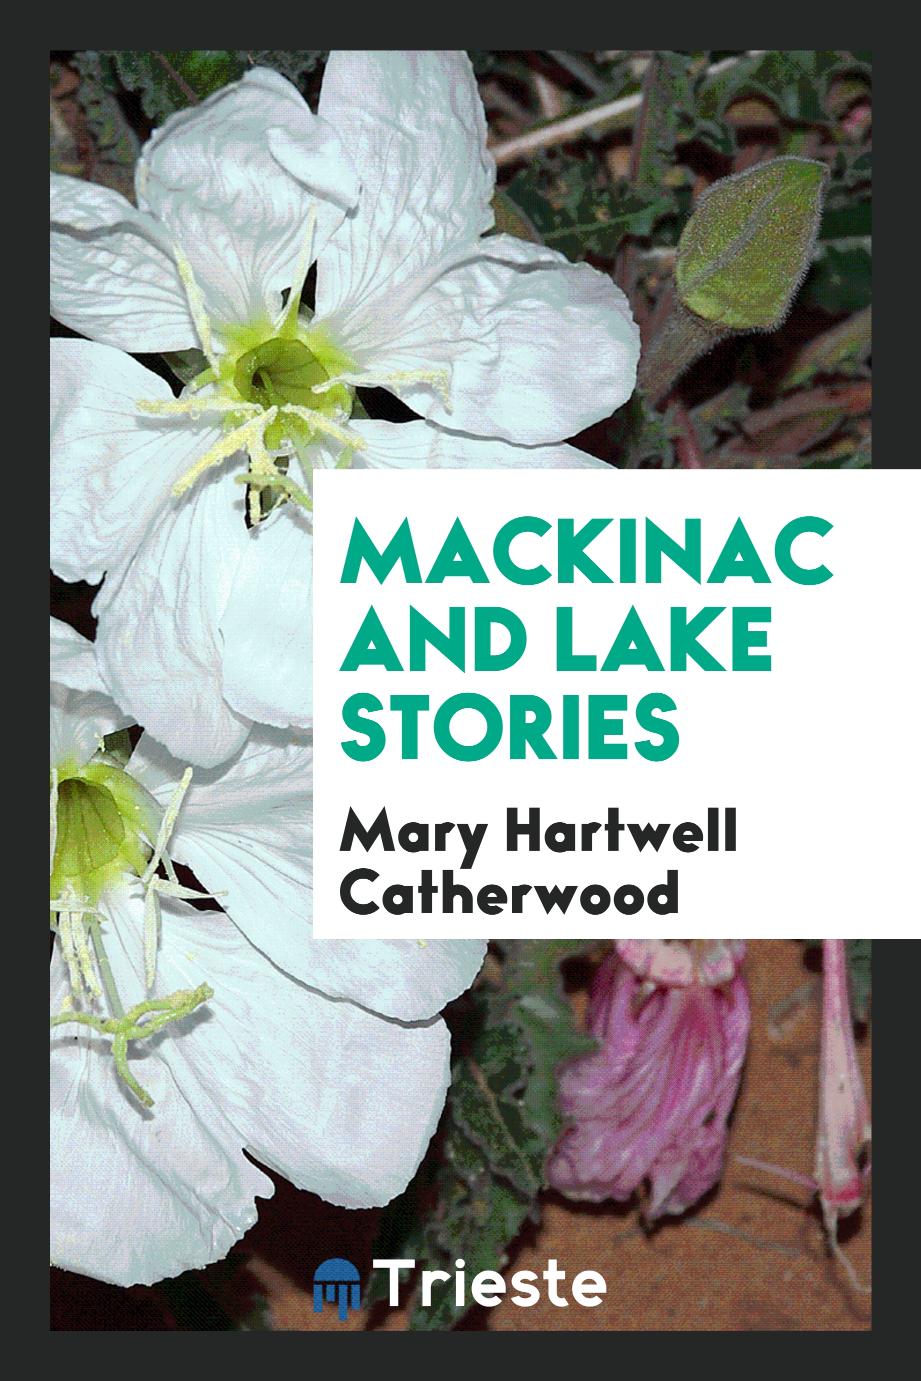 Mackinac and lake stories